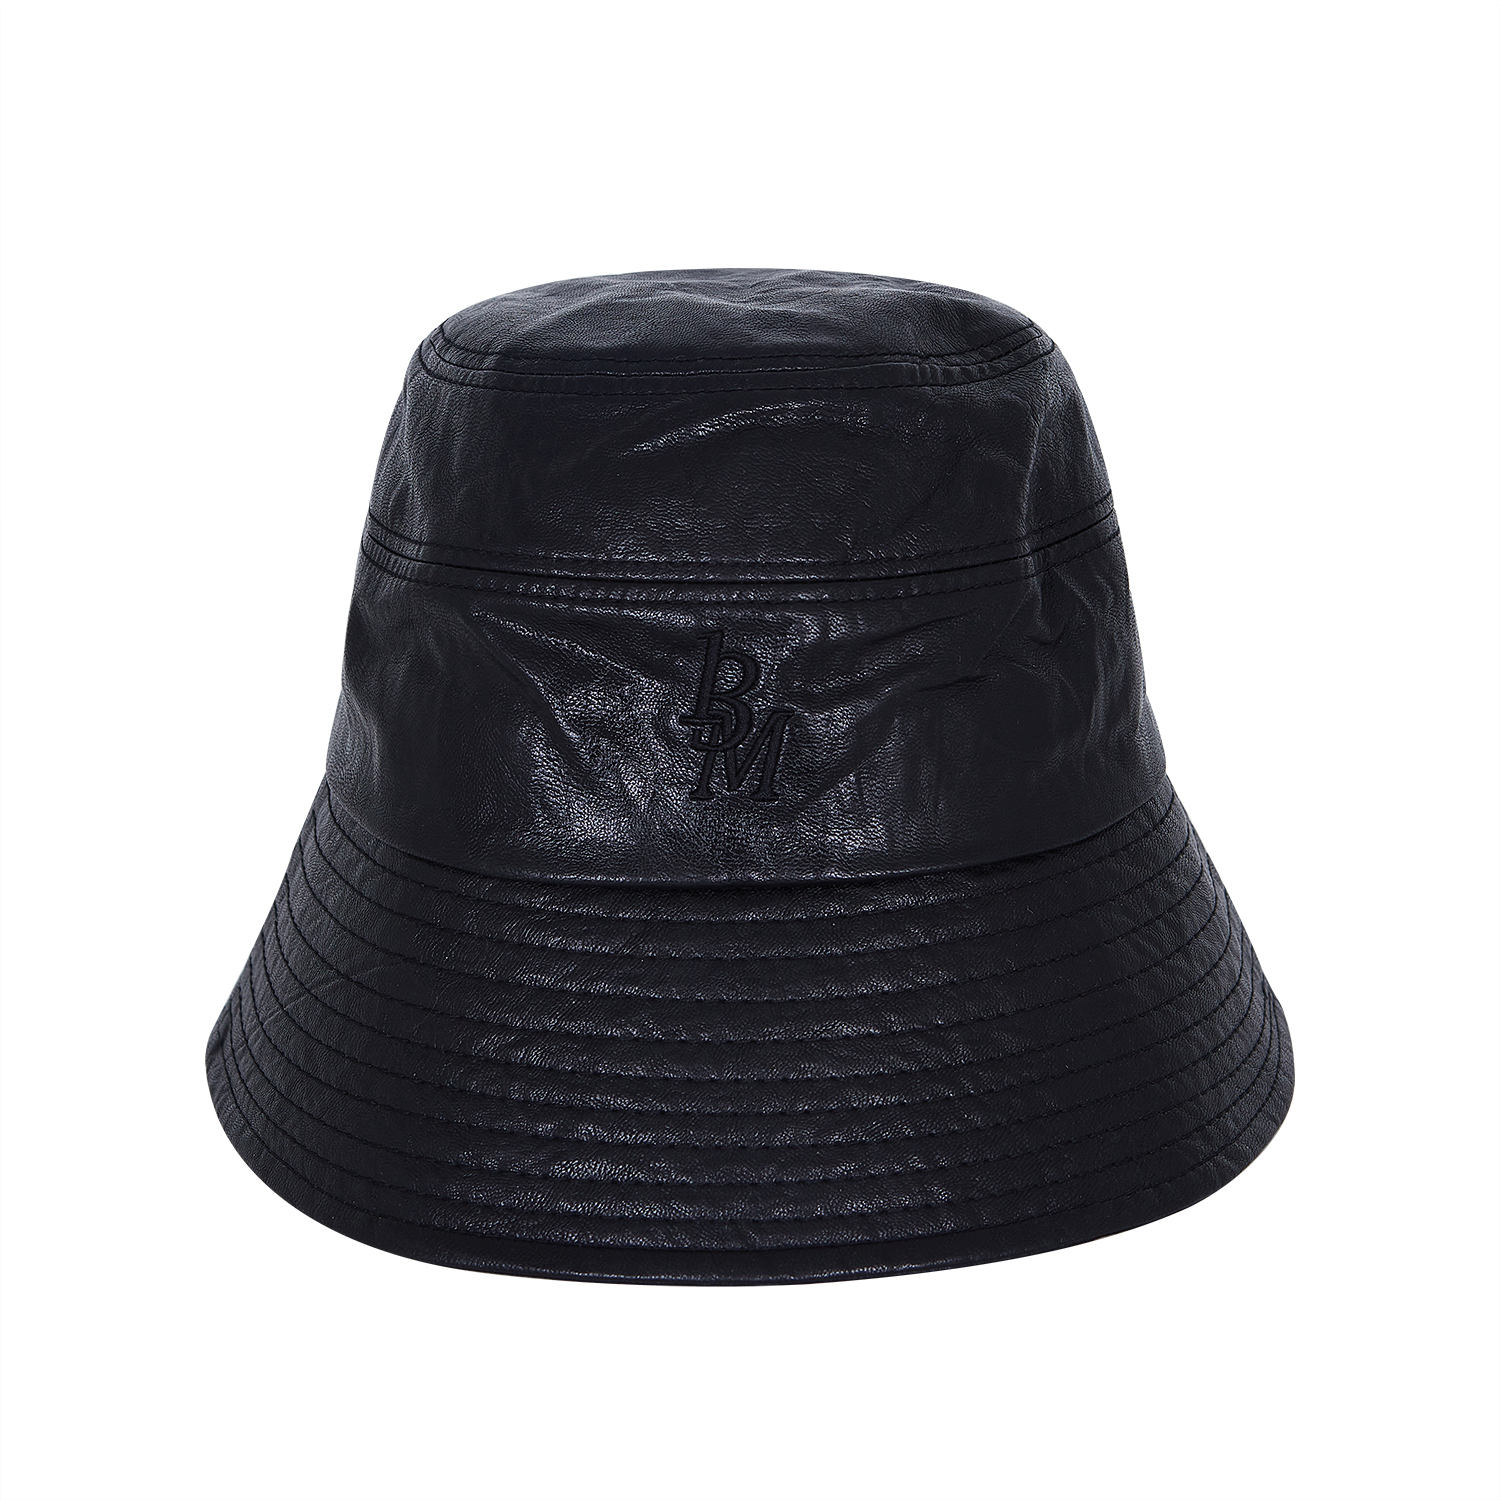 STITCH LEATHER BUCKET HAT (BLACK)